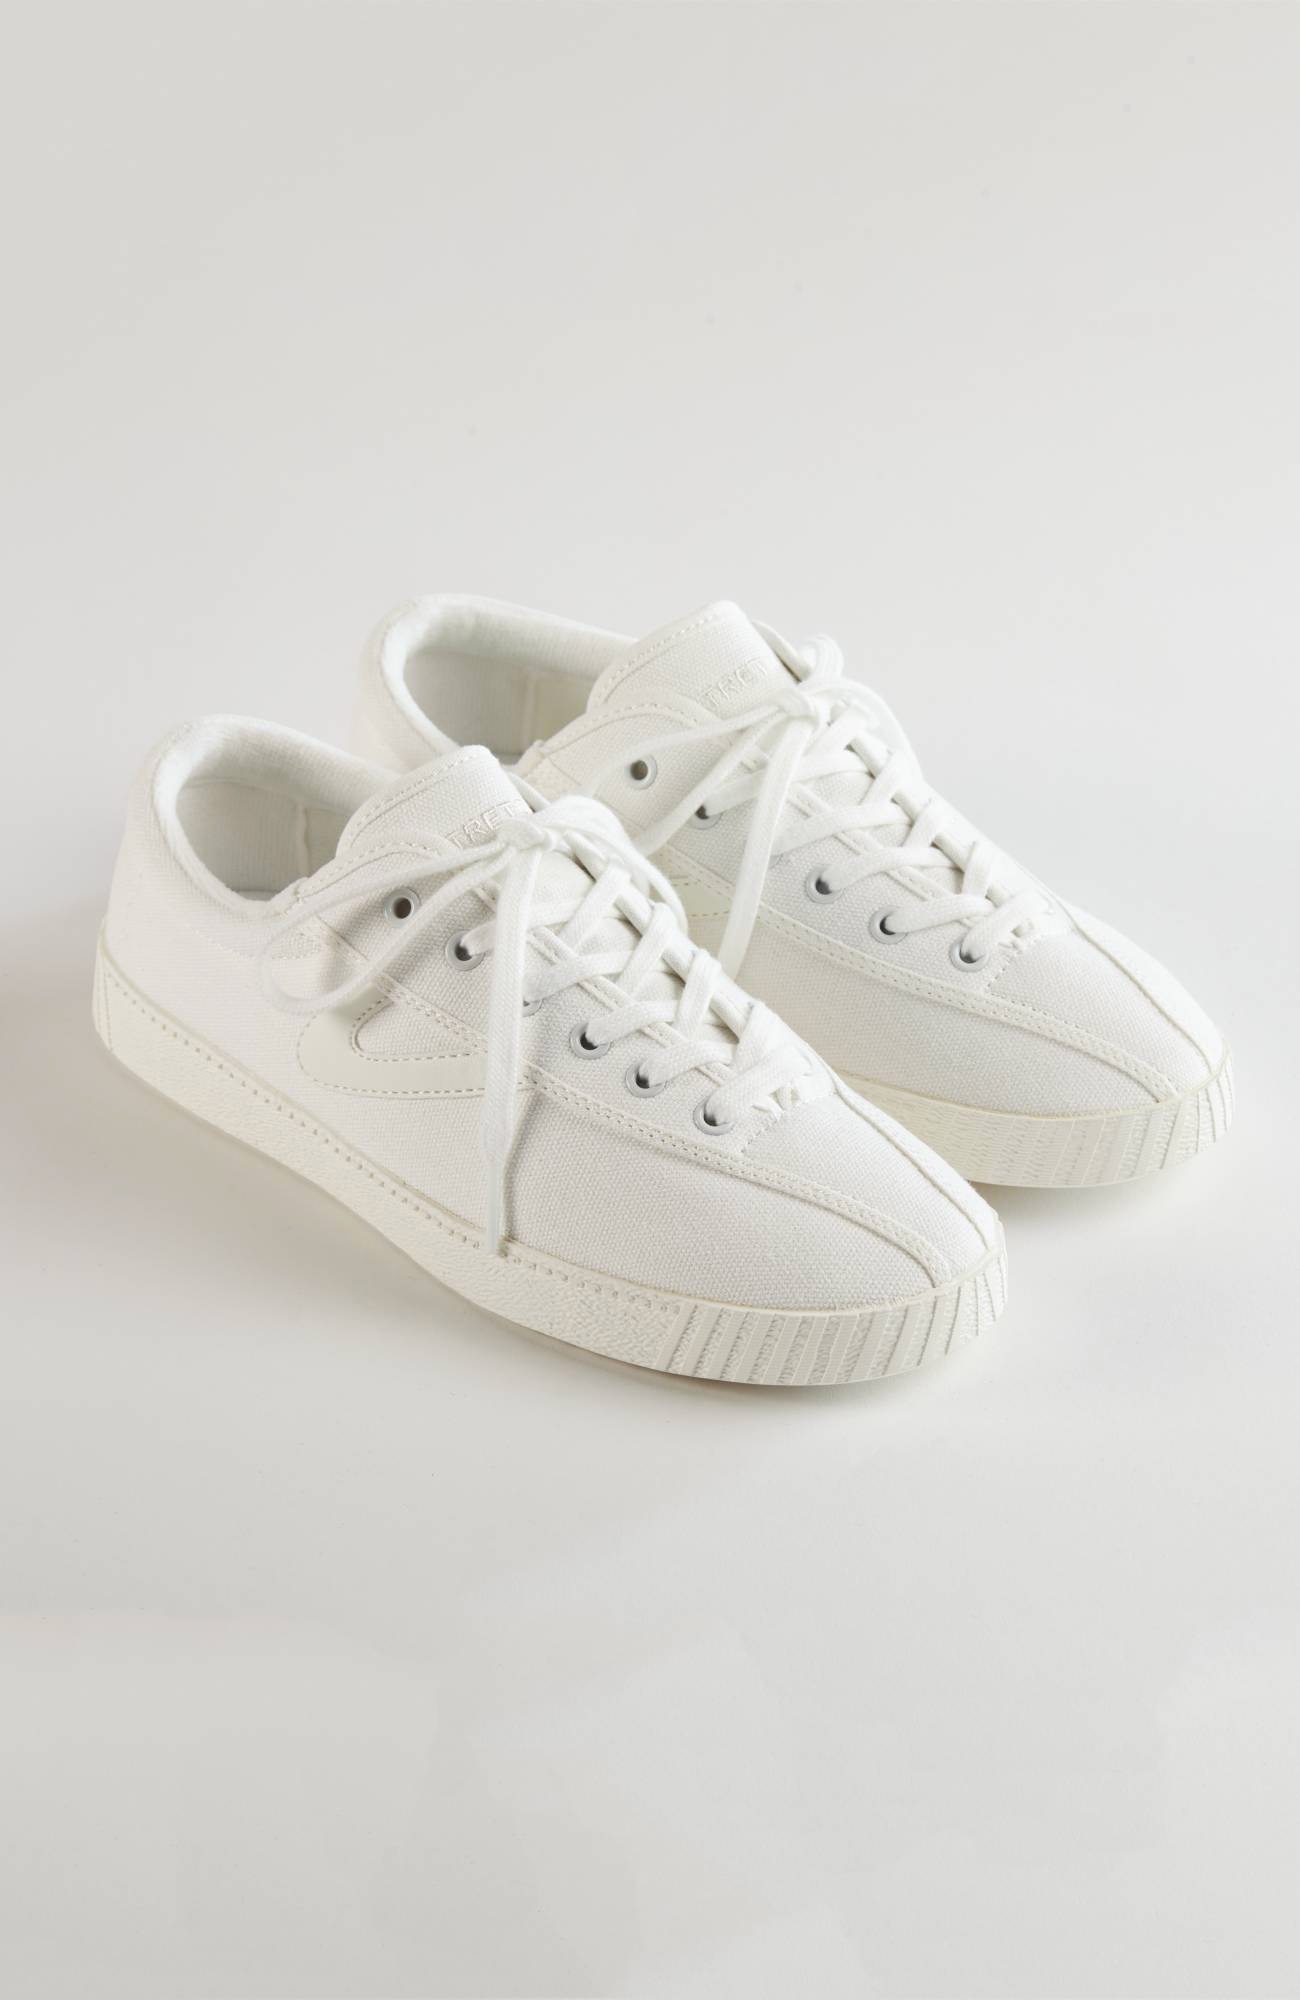 tretorn white canvas sneakers